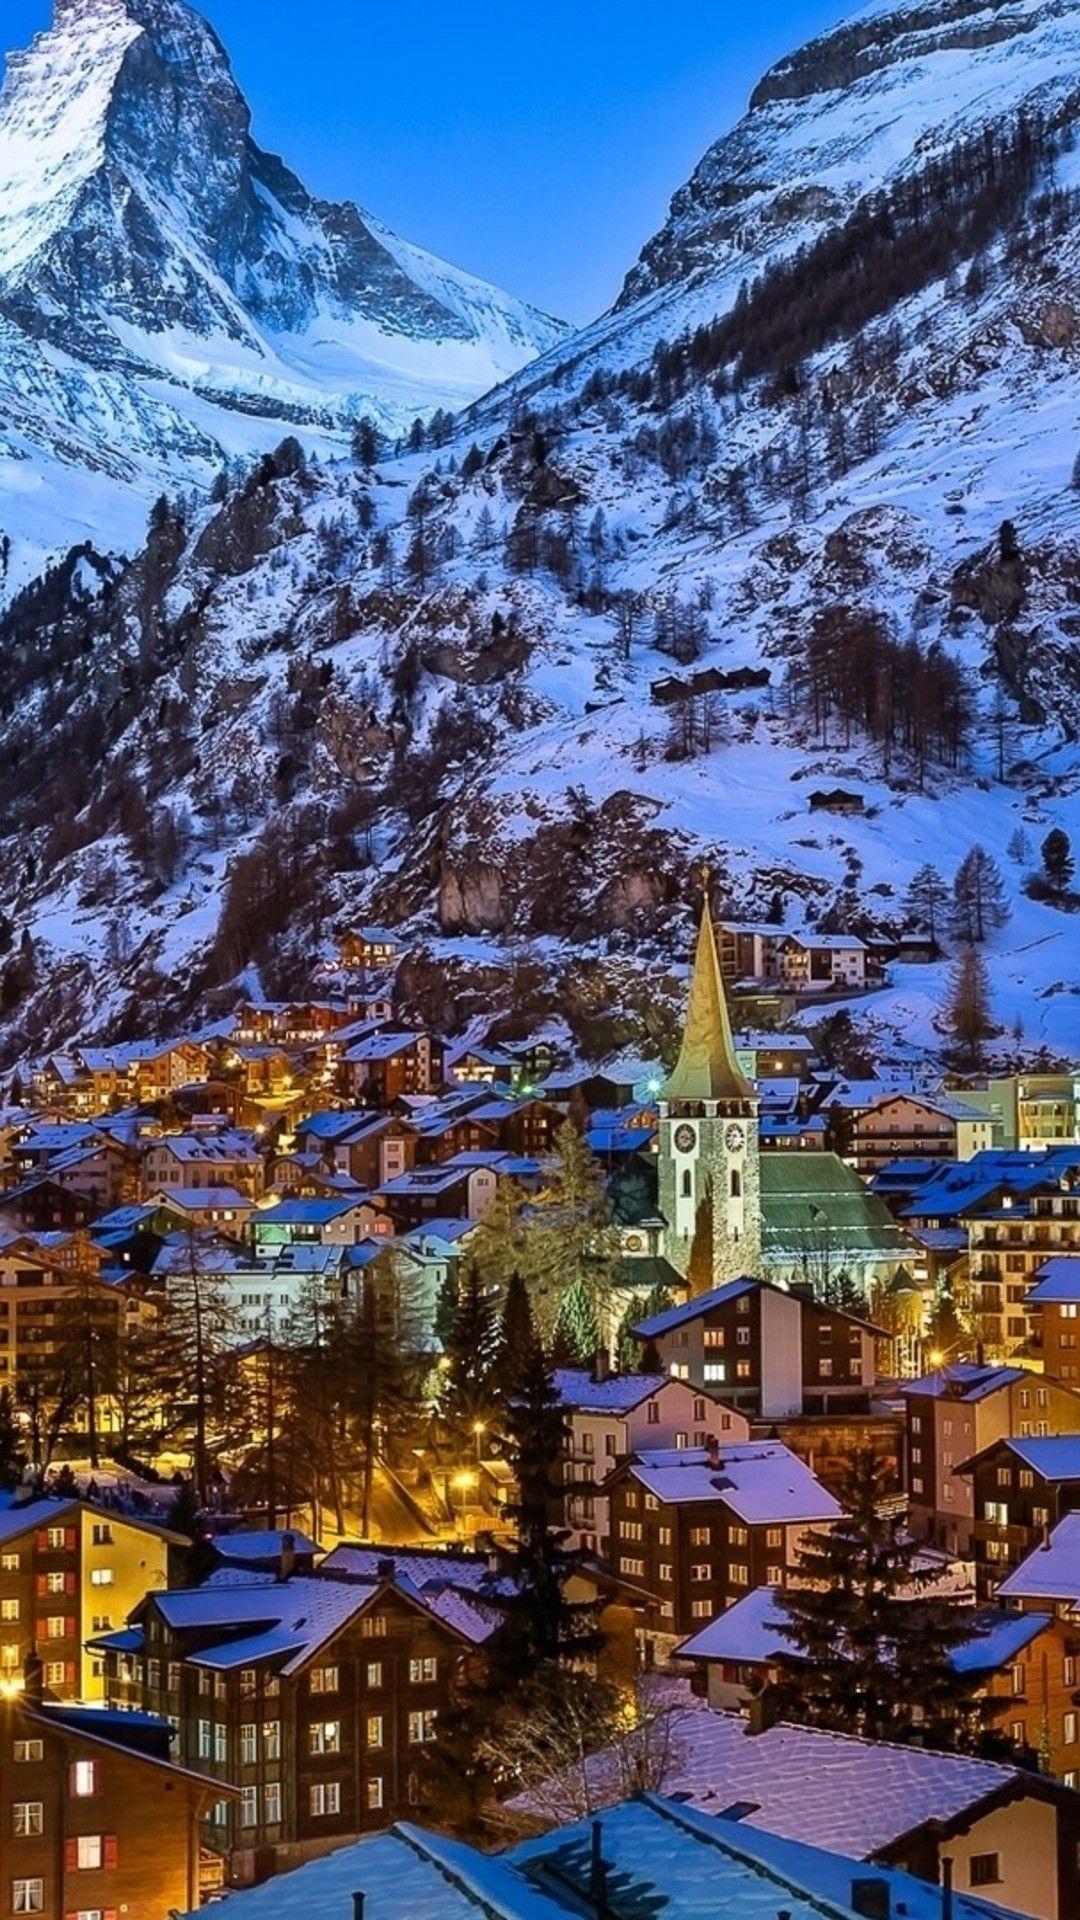 Wallpaper Download 1080x1920 Winter at Zermatt Valley Switzerland. Winter Wallpaper. Seasons Wallpap. Best ski resorts, Cool places to visit, Zermatt switzerland